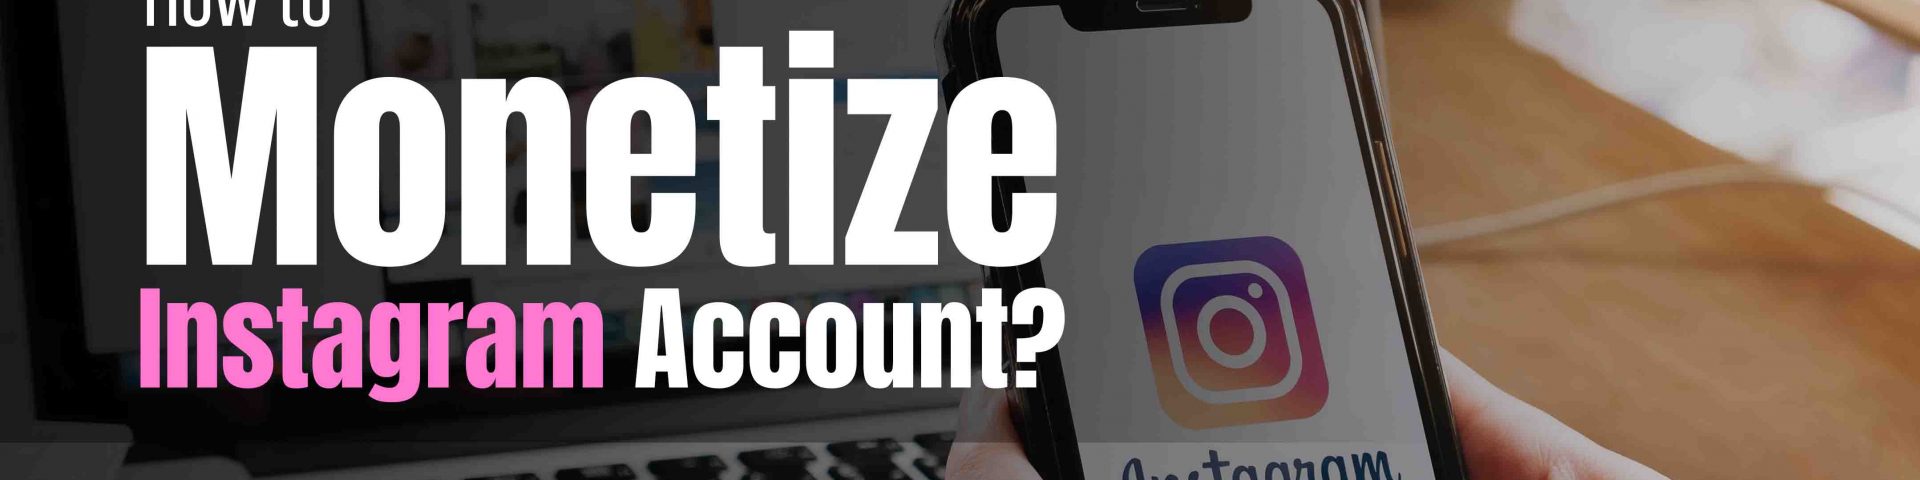 How to Monetize Instagram Account